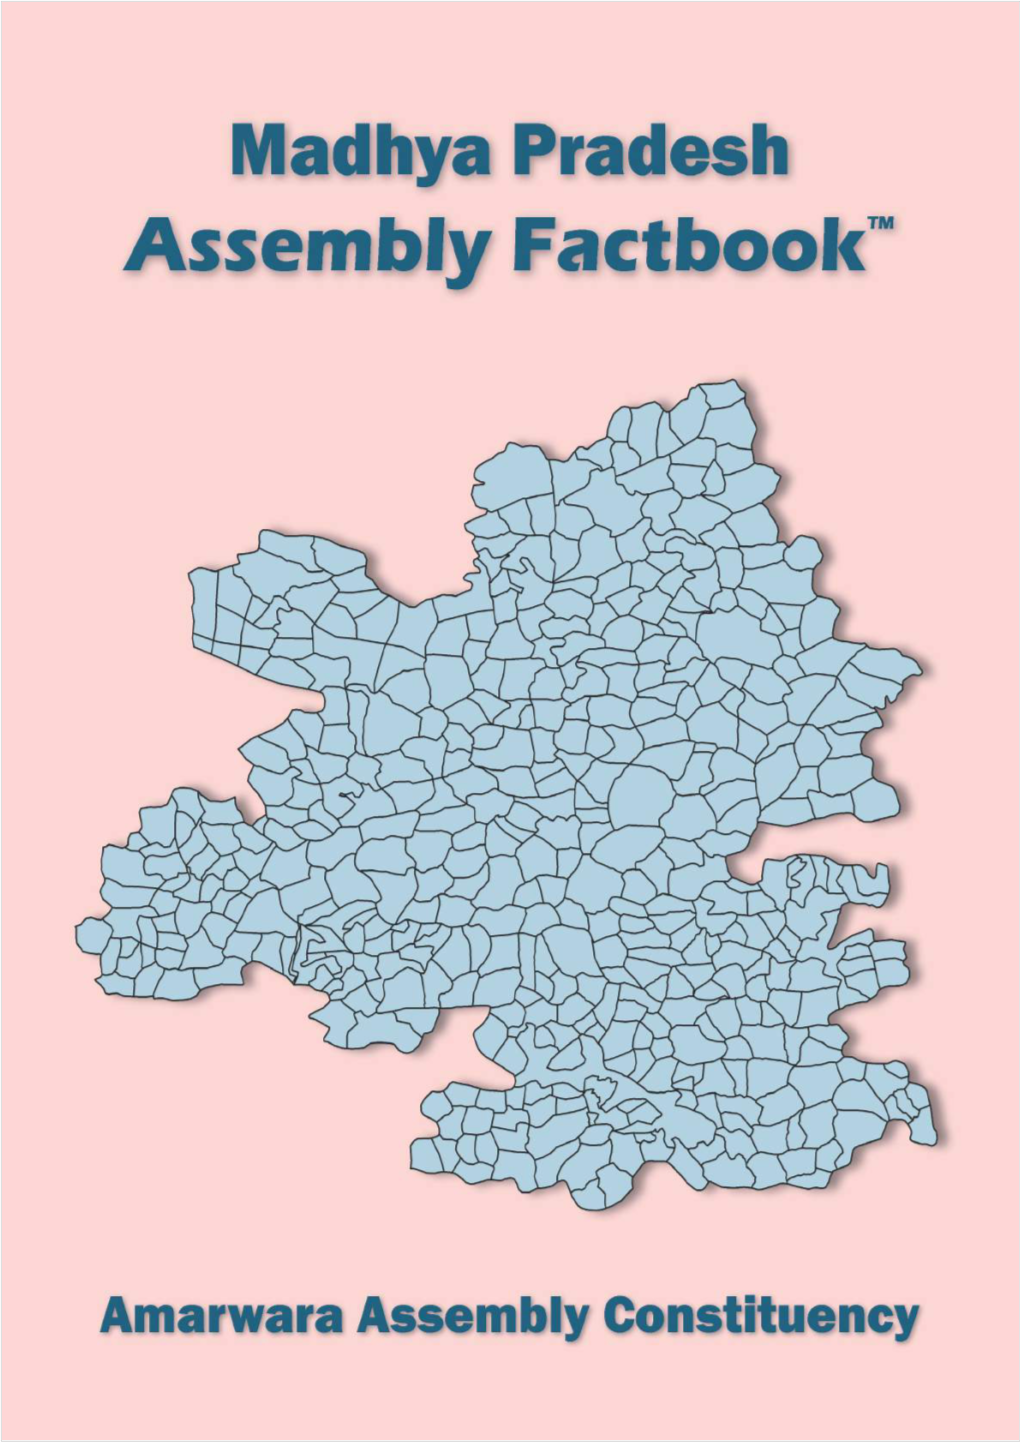 Amarwara Assembly Madhya Pradesh Factbook